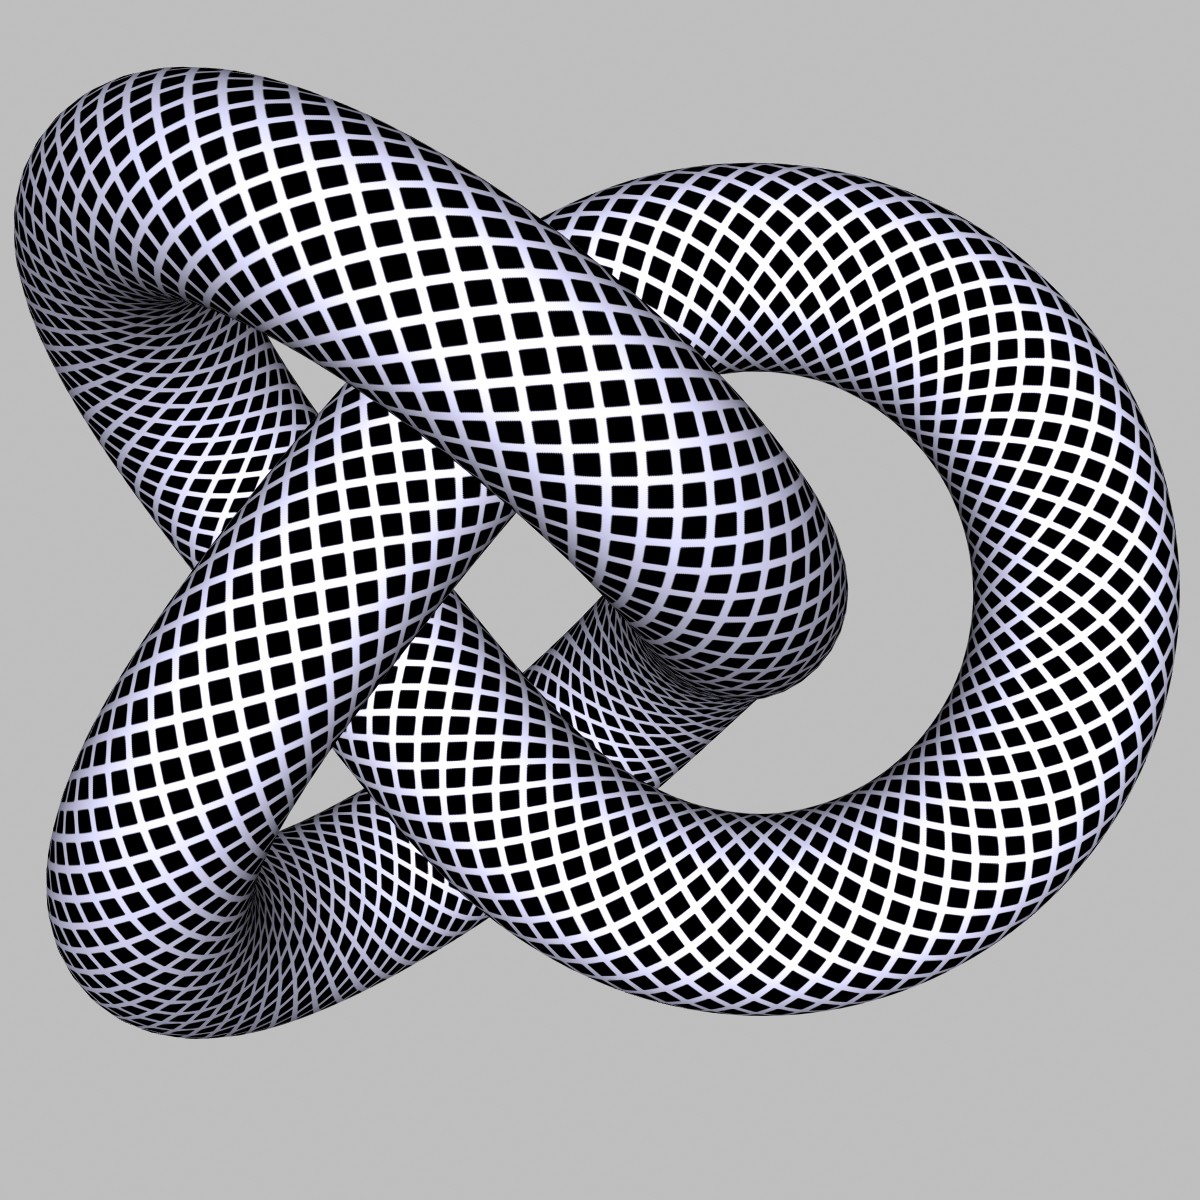 Circular Geometric Illusions